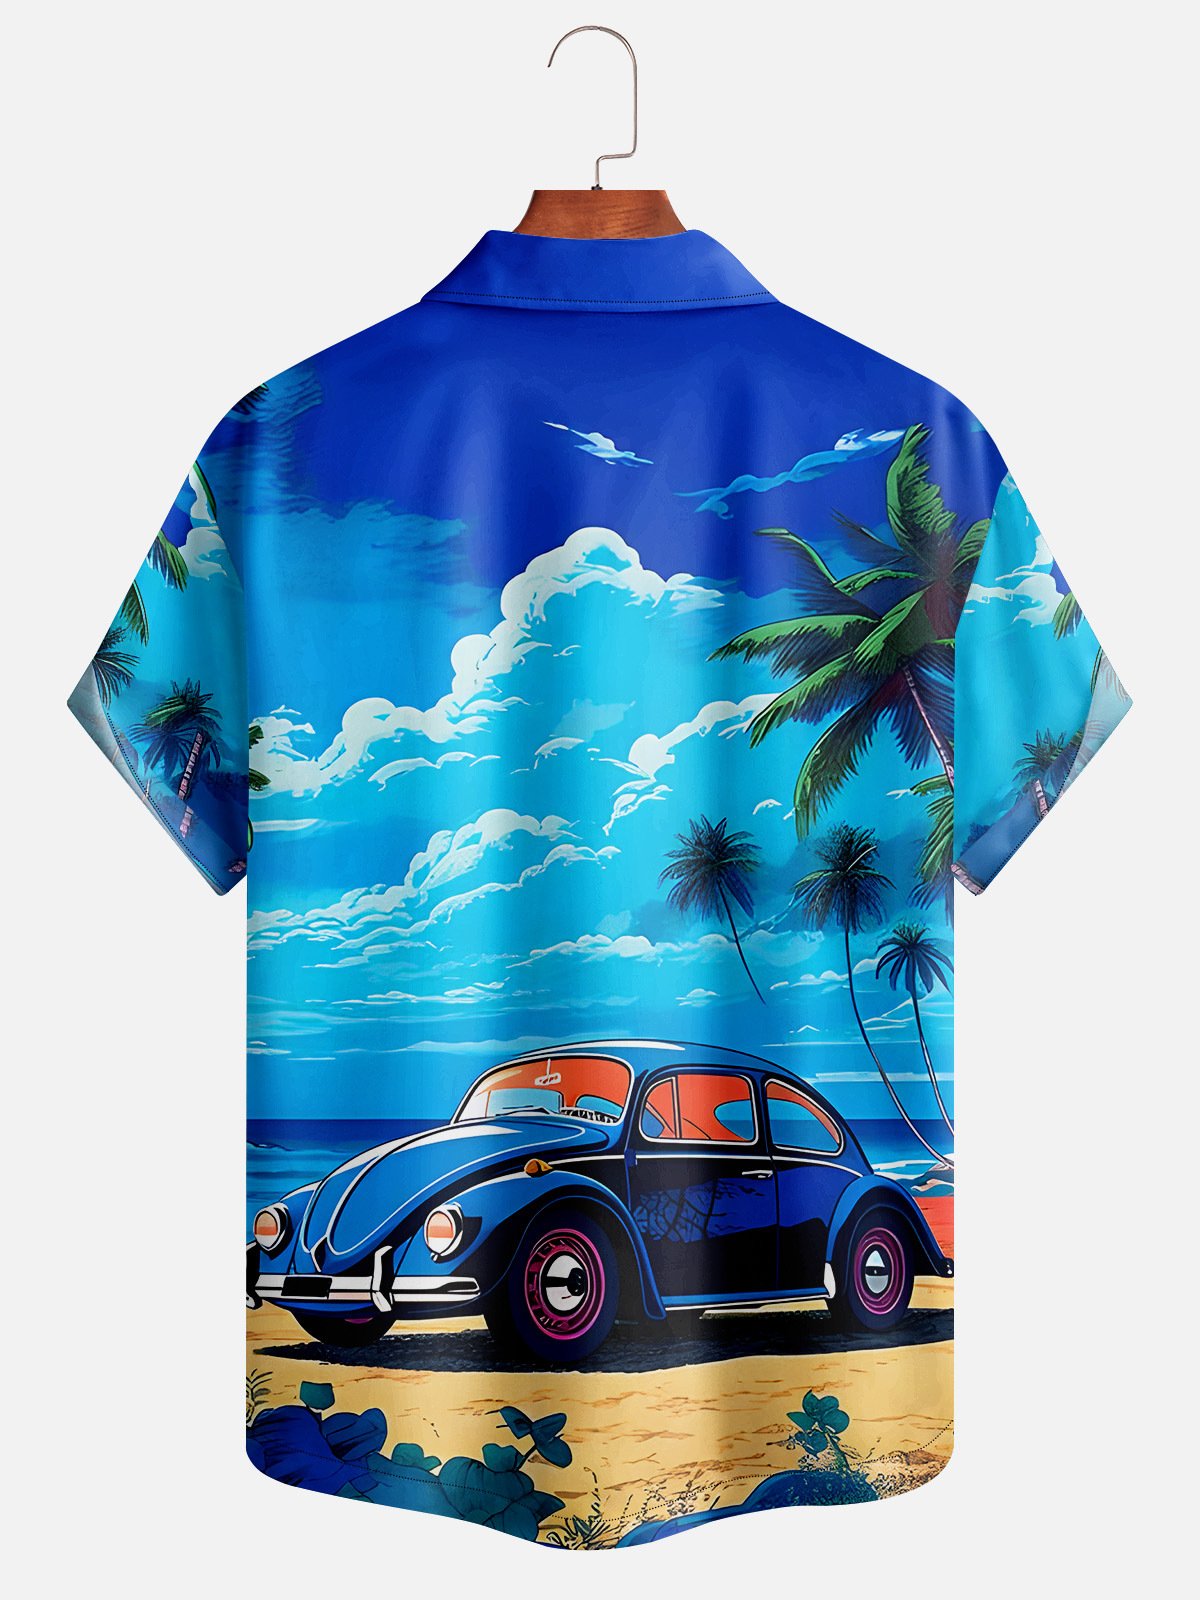 Hardaddy Vintage Car Beachside Aloha Shirt